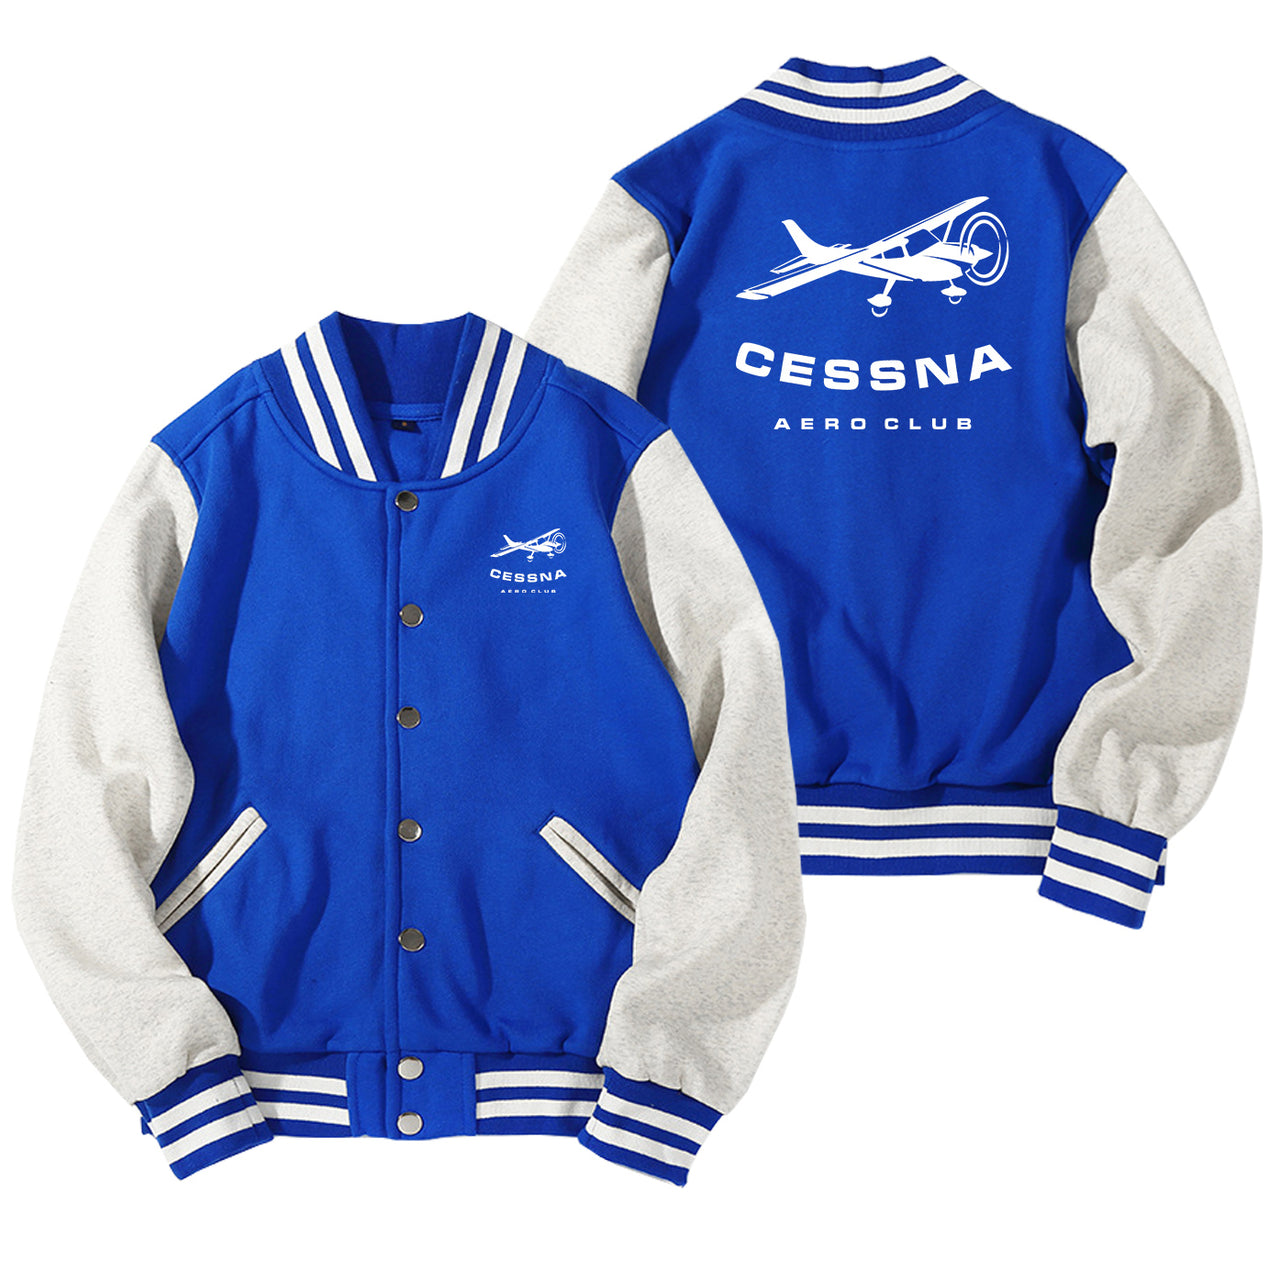 Cessna Aeroclub Designed Baseball Style Jackets